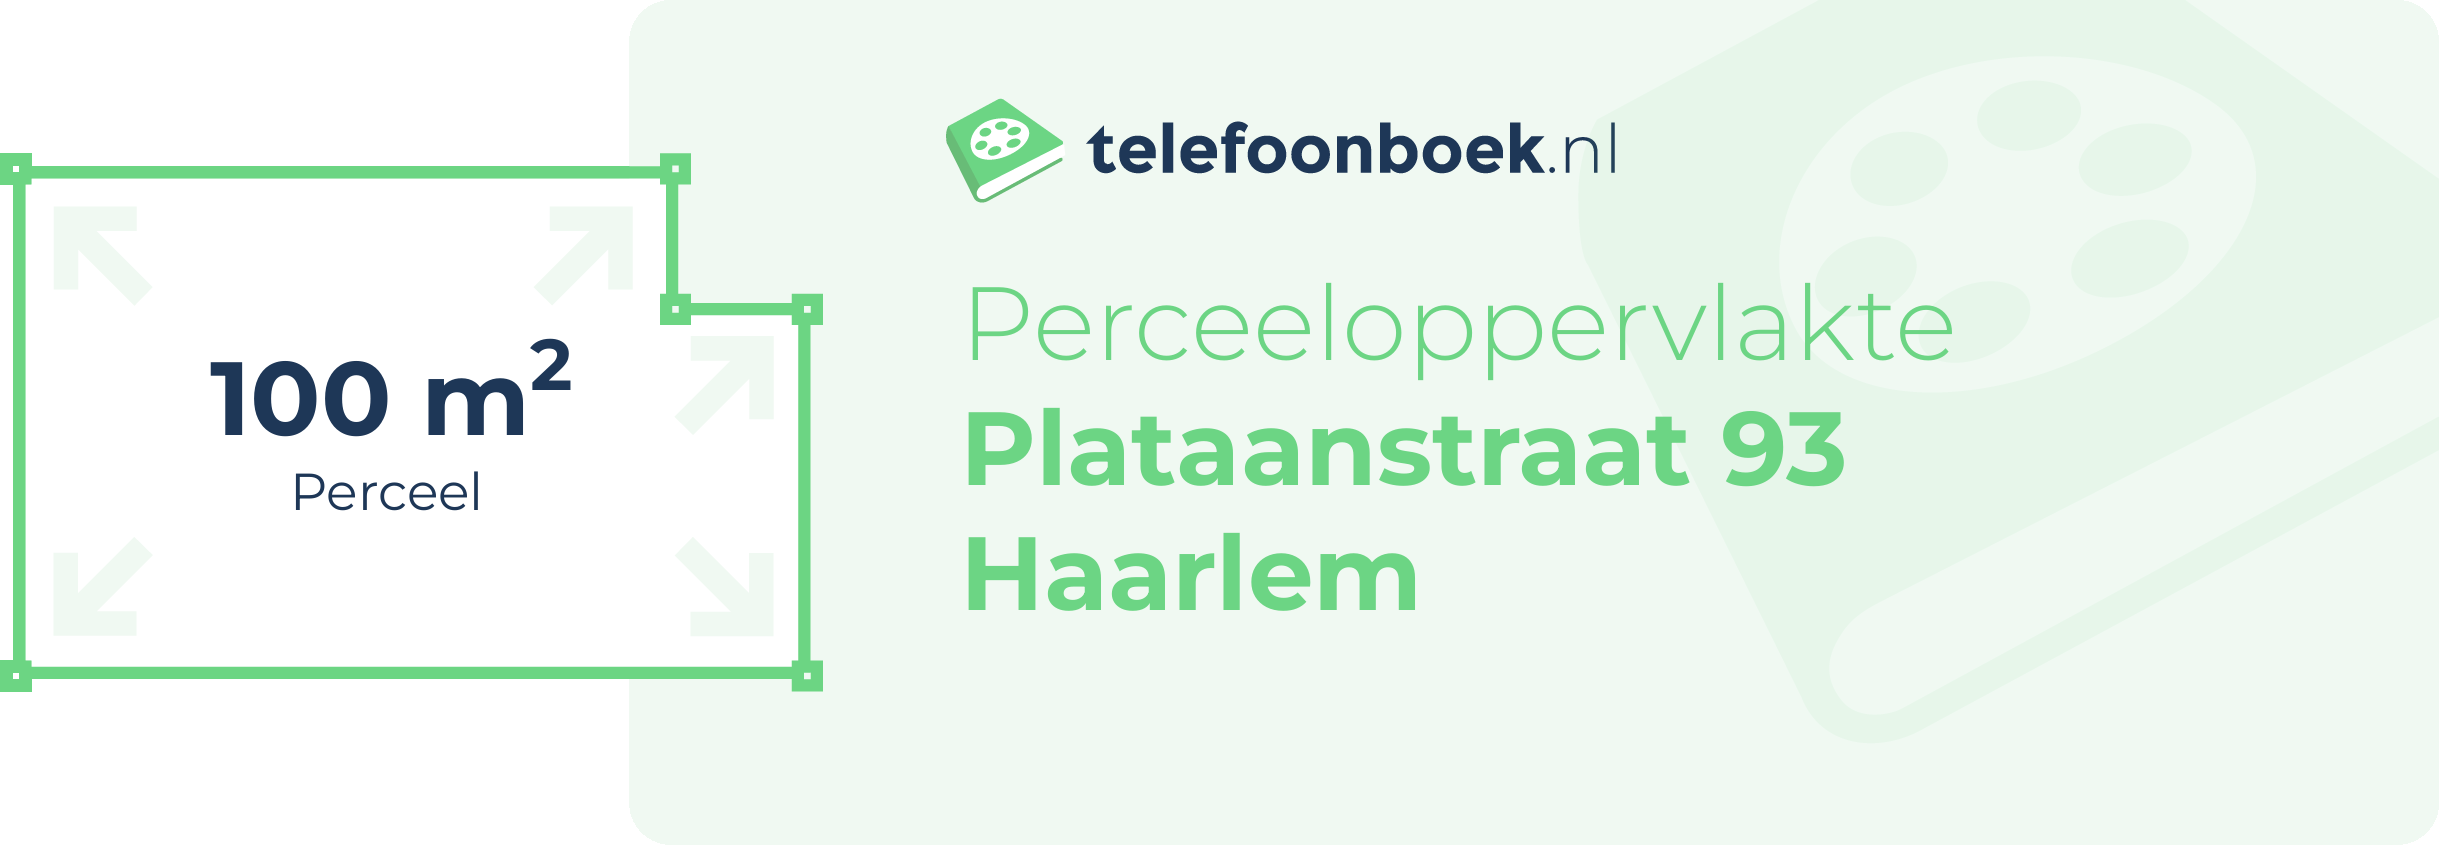 Perceeloppervlakte Plataanstraat 93 Haarlem